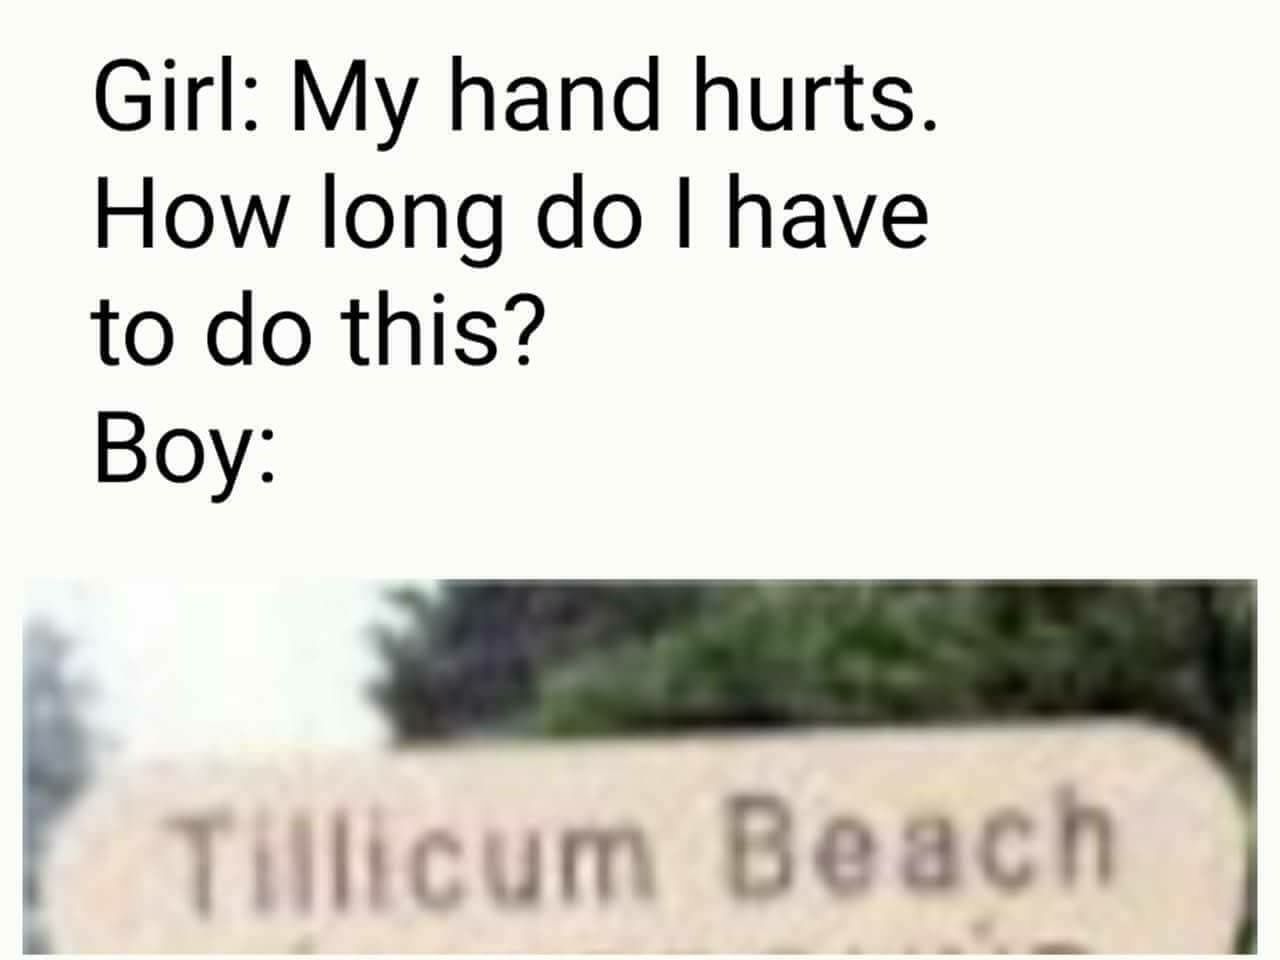 tilicum beach - Girl My hand hurts. How long do I have to do this? Boy Tillicum Beach